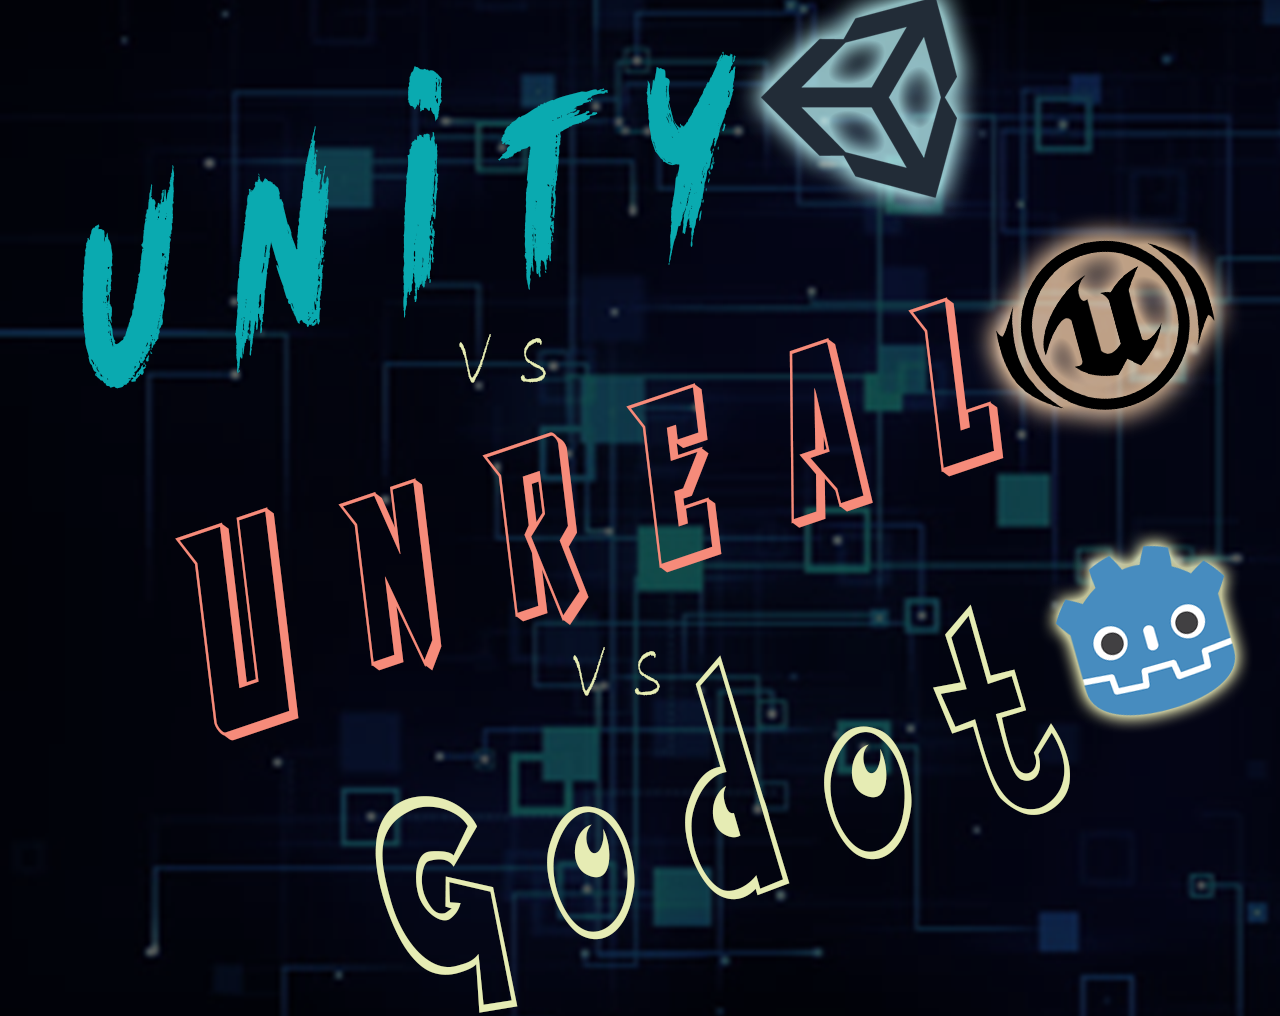 unity vs godot